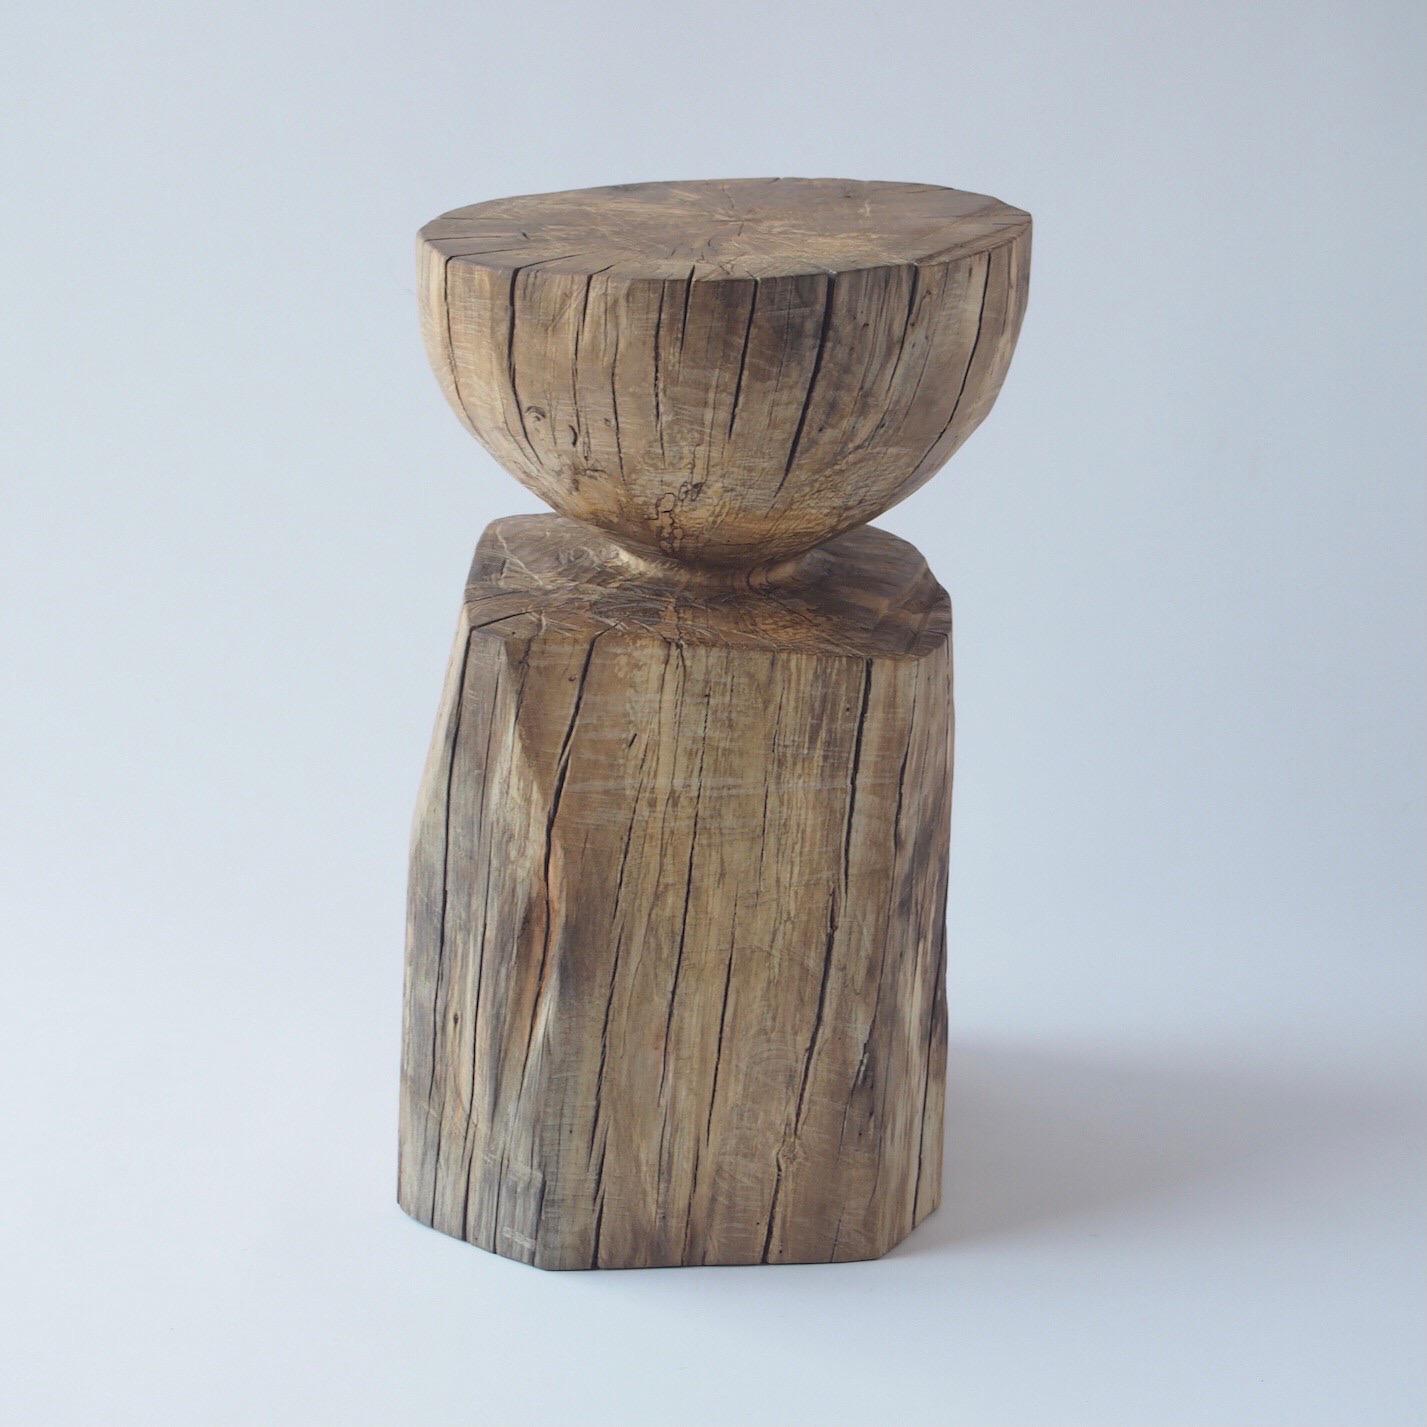 Japanese Hiroyuki Nishimura and Zogei Furniture Sculptural Wood Stool11 Tribal Glamping For Sale